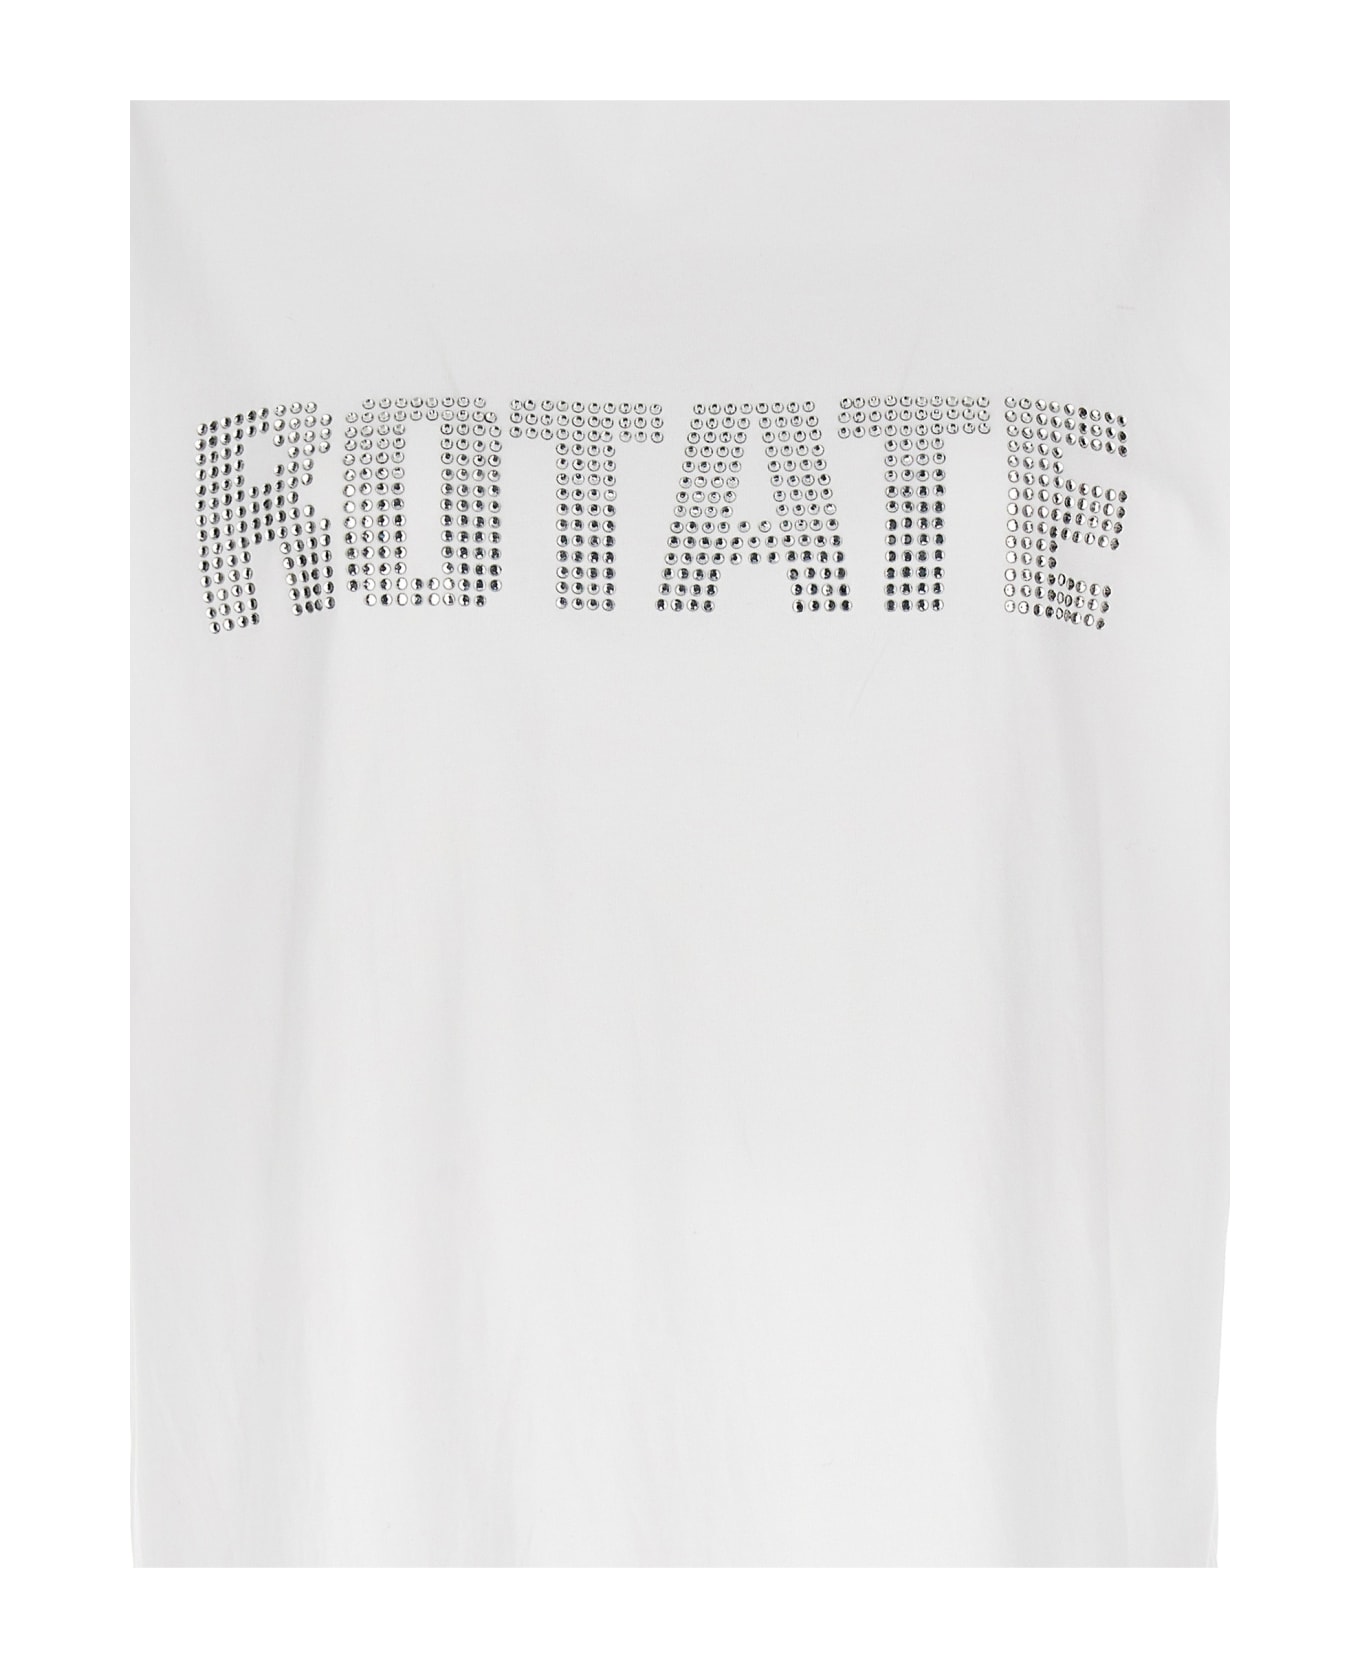 Rotate by Birger Christensen Sunday Capsule Logo T-shirt - White Tシャツ